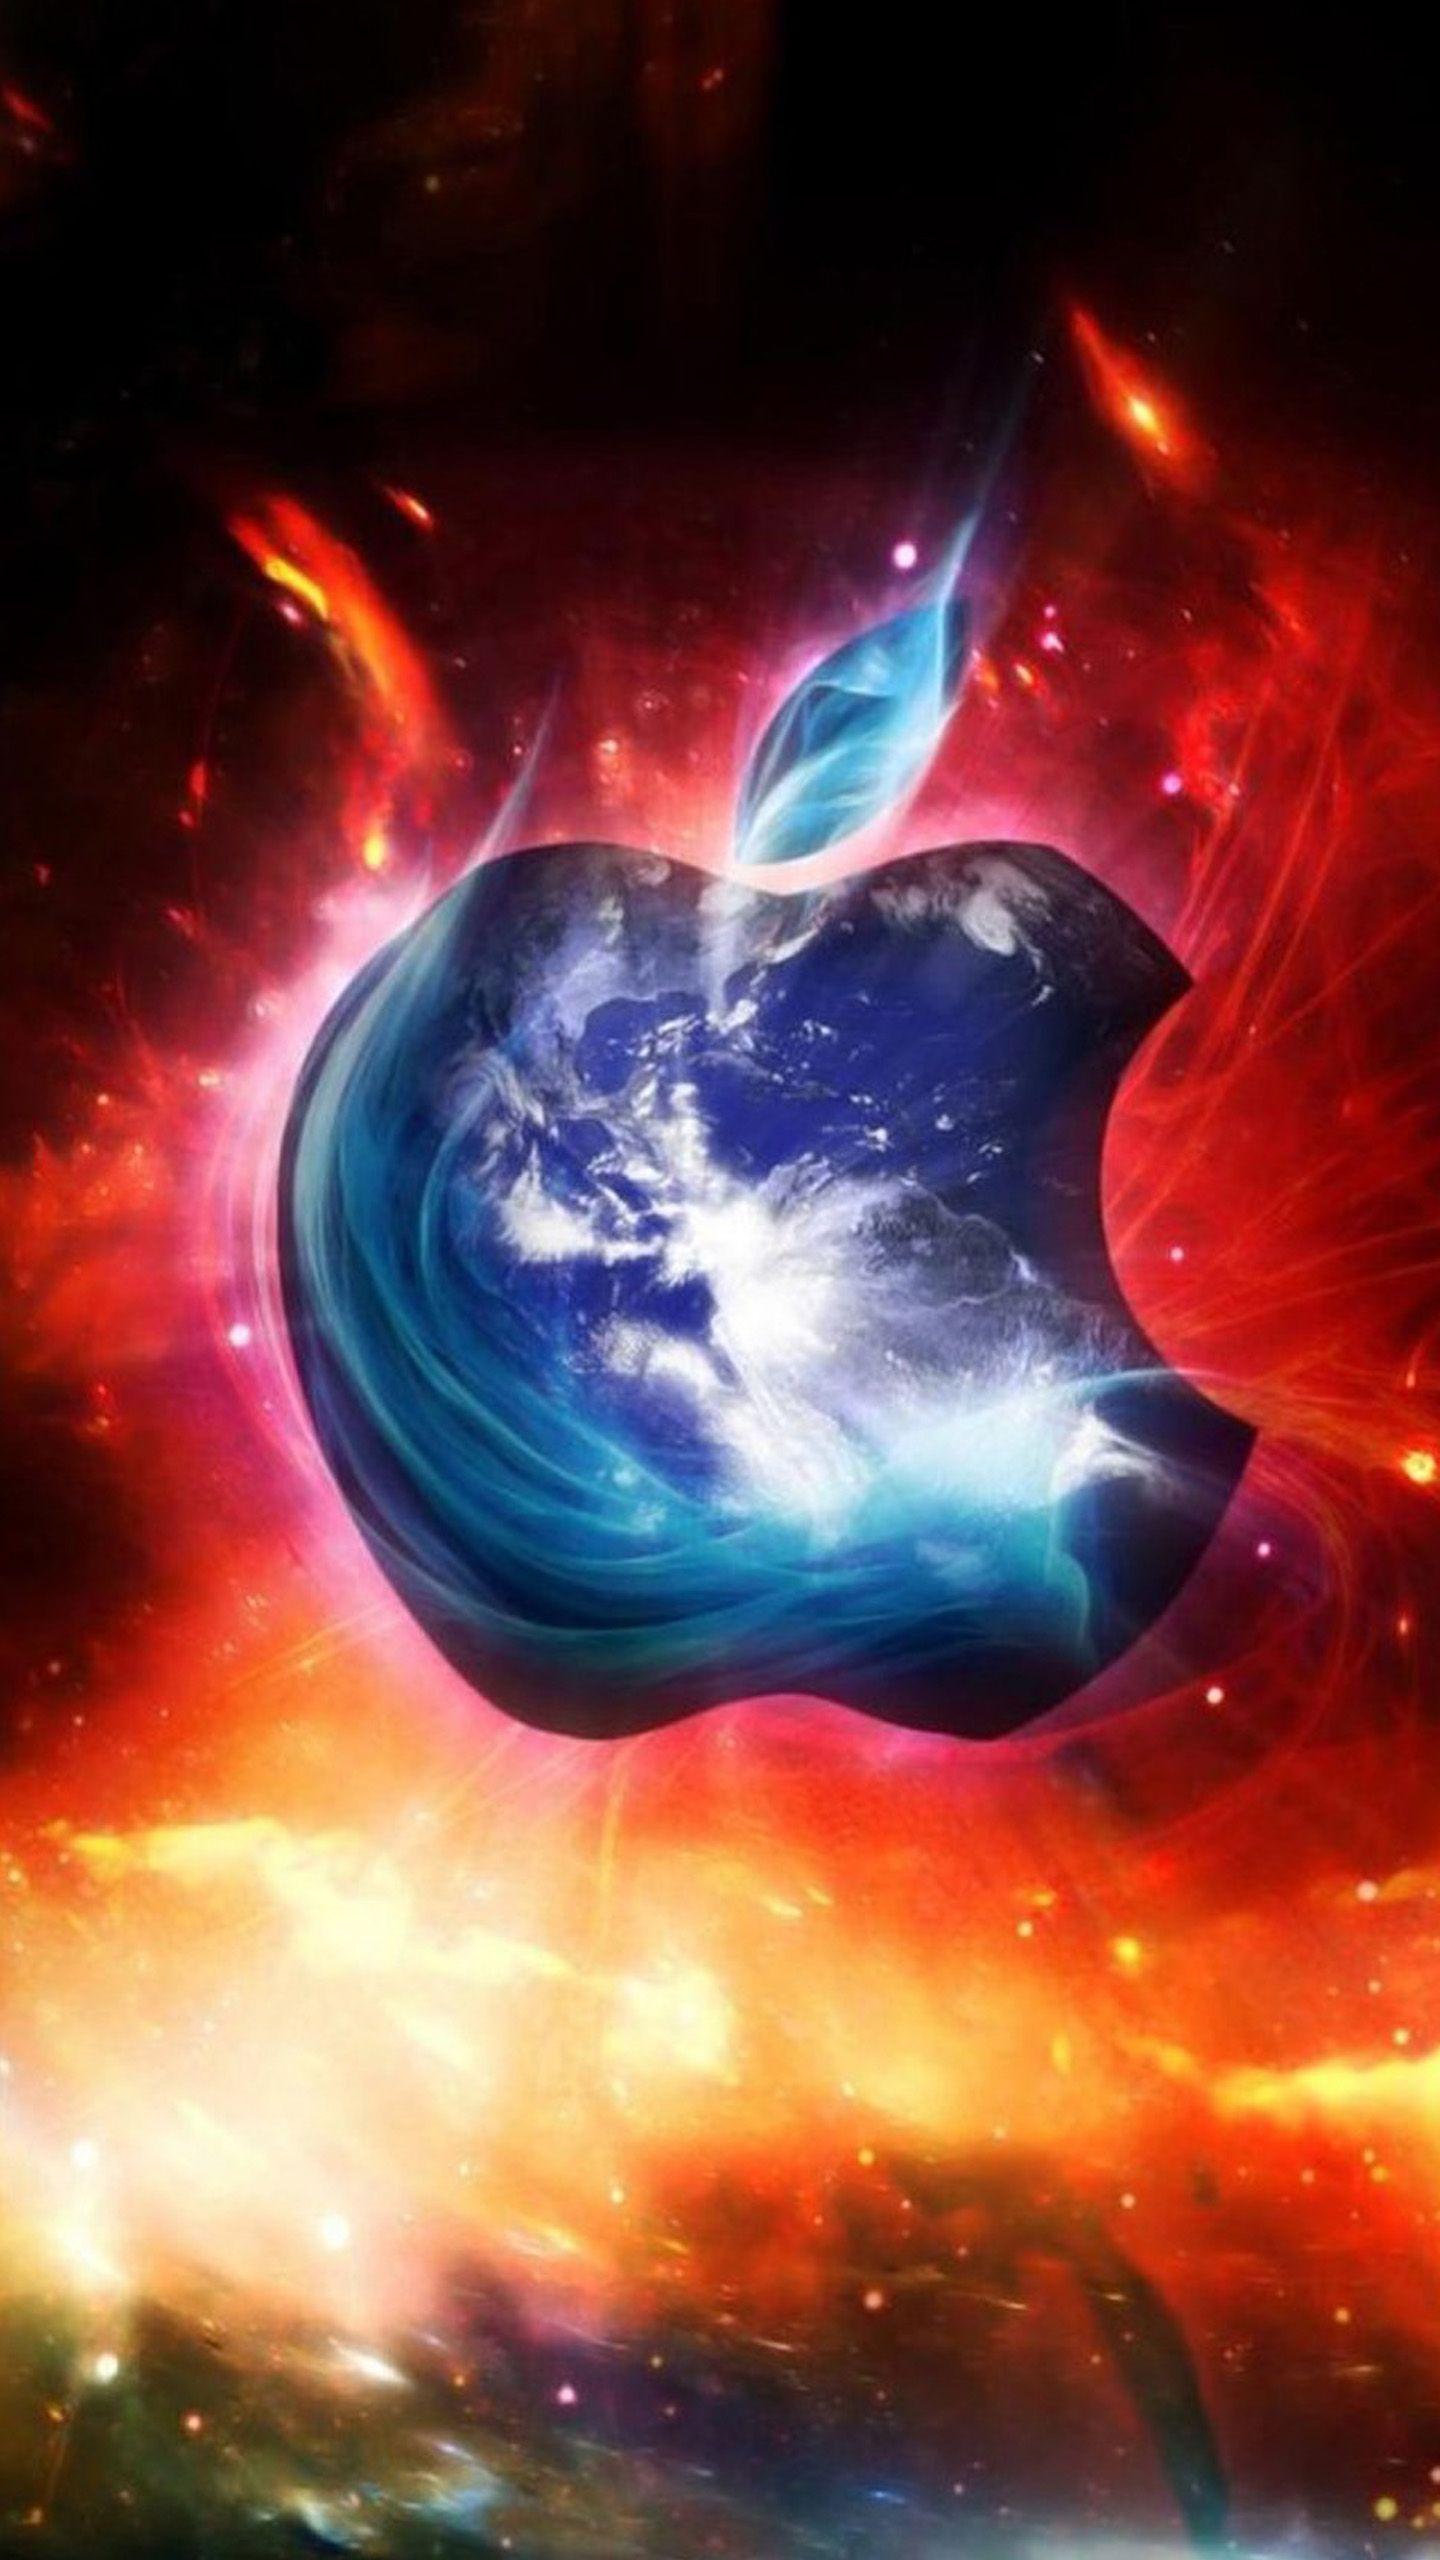 Cool Apple Logo - Cool Apple logo 2 Galaxy S6 Wallpaper. Galaxy S6 Wallpaper